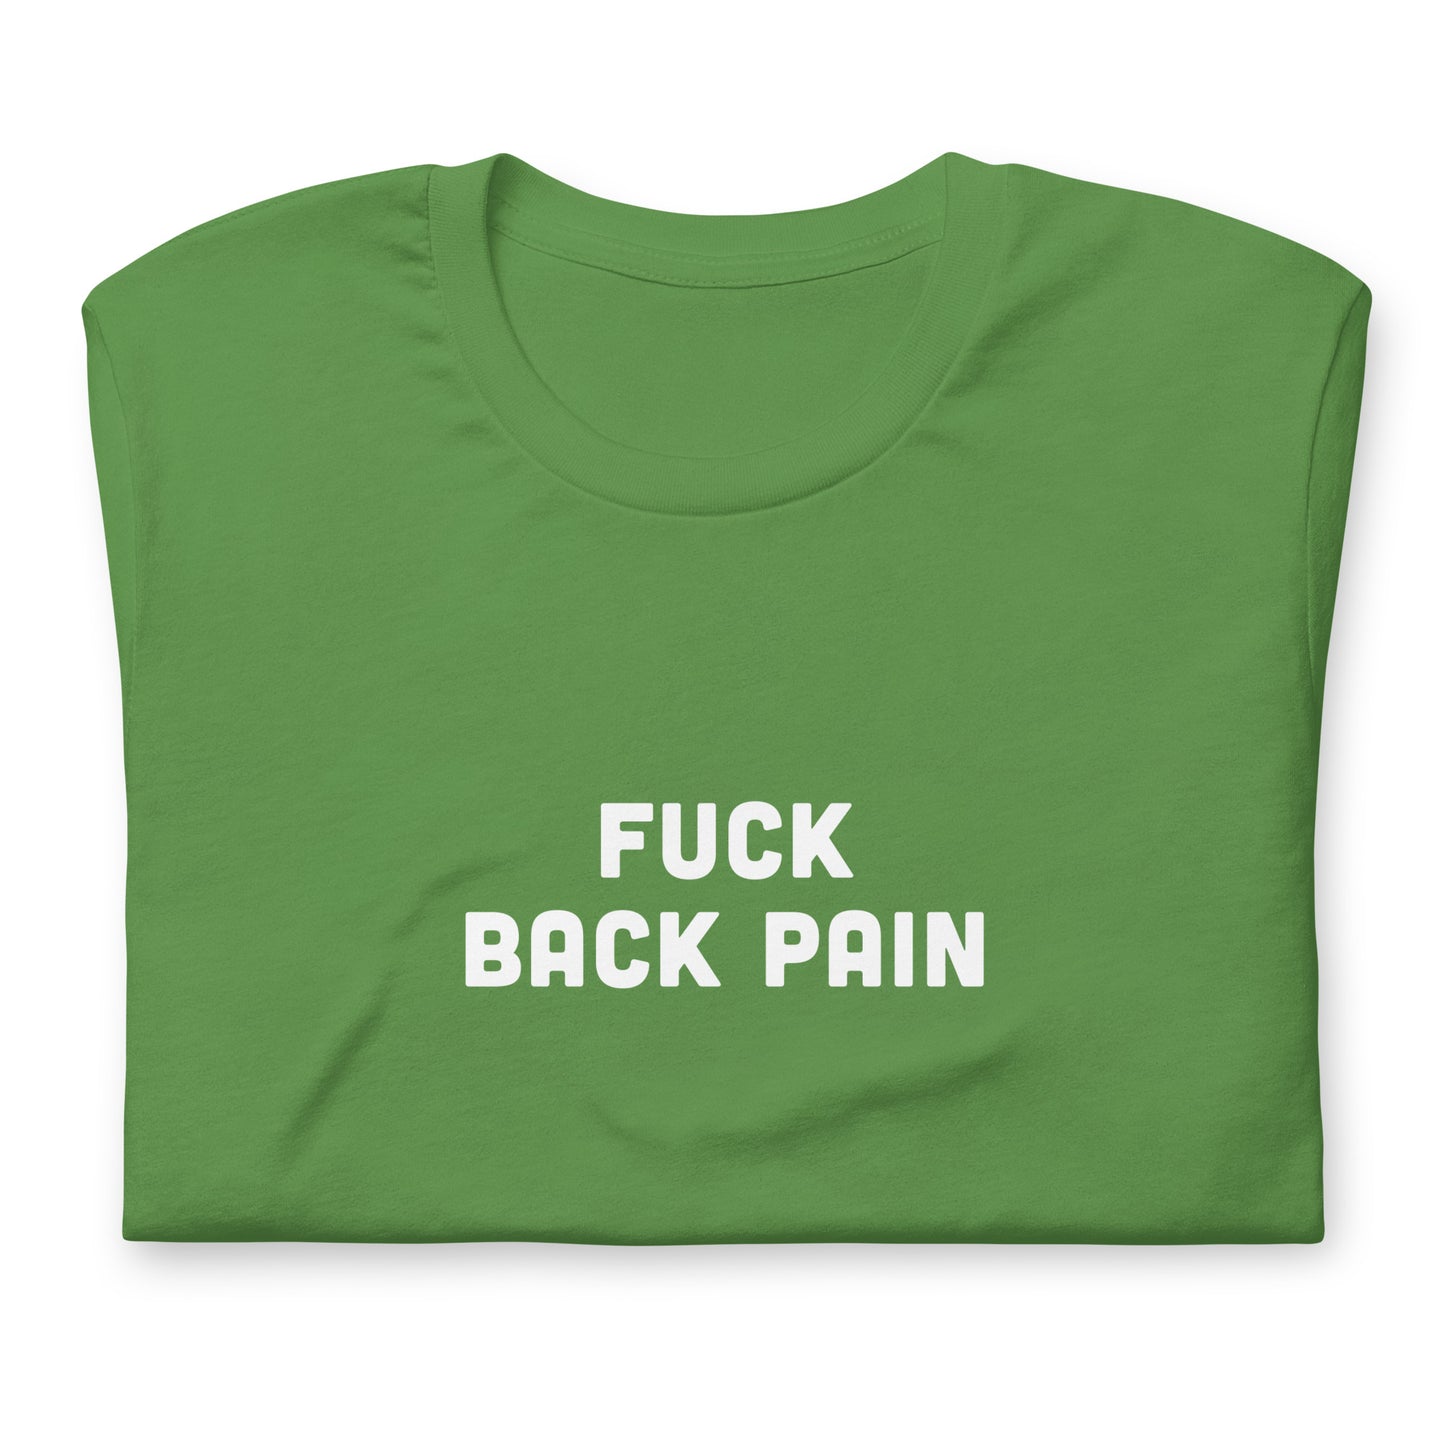 Fuck Back Pain T-Shirt Size 2XL Color Navy